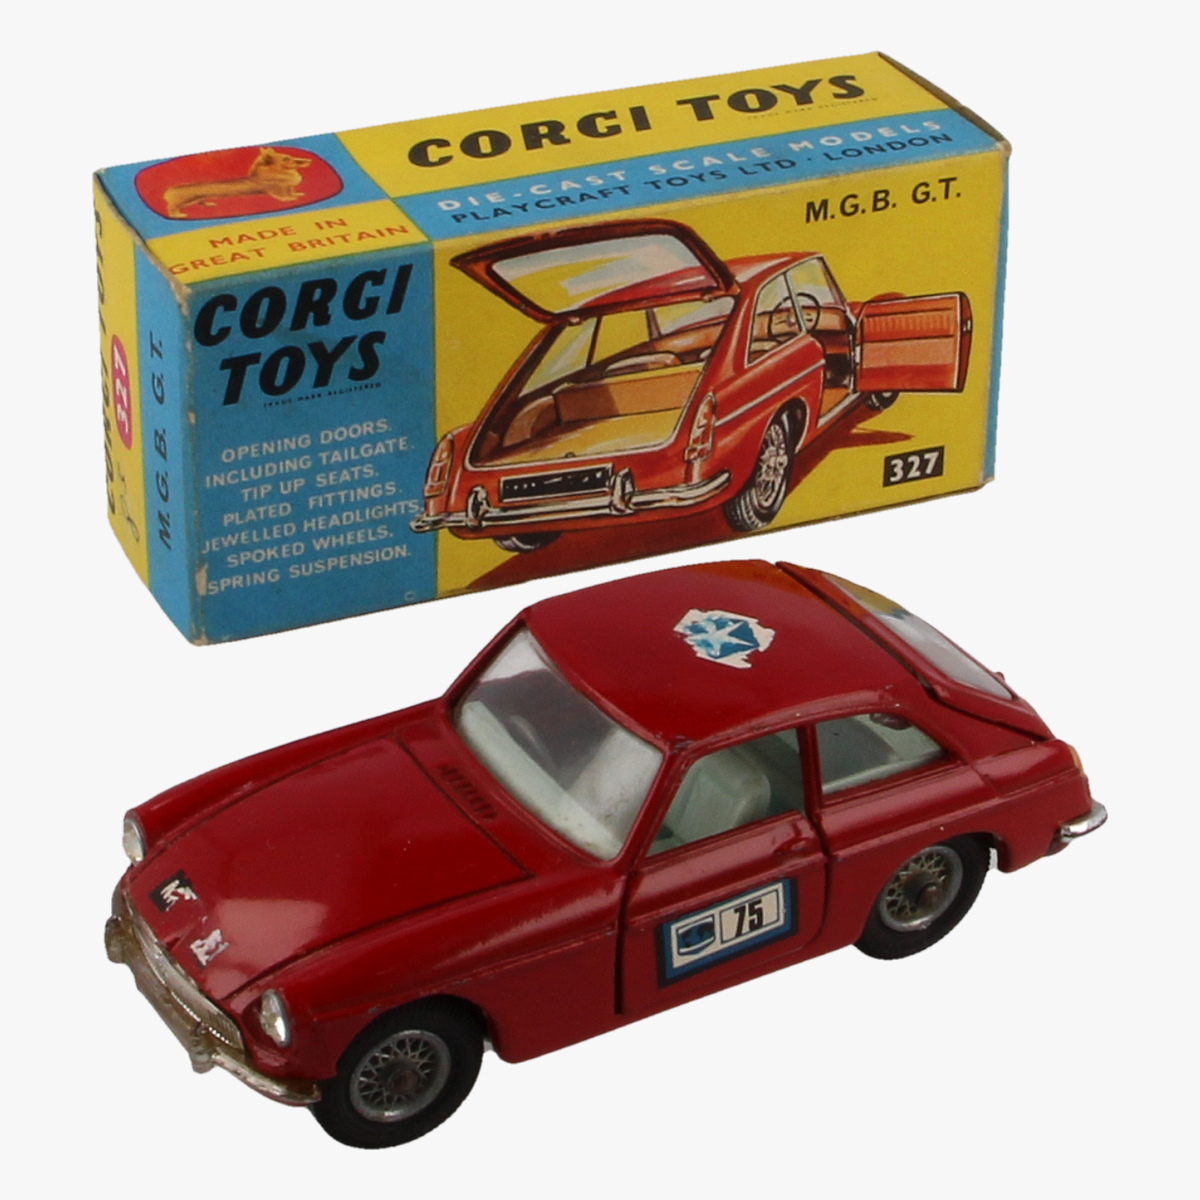 Afbeeldingen van Corgi Toys. M.G.B. G.T. Nr. 327